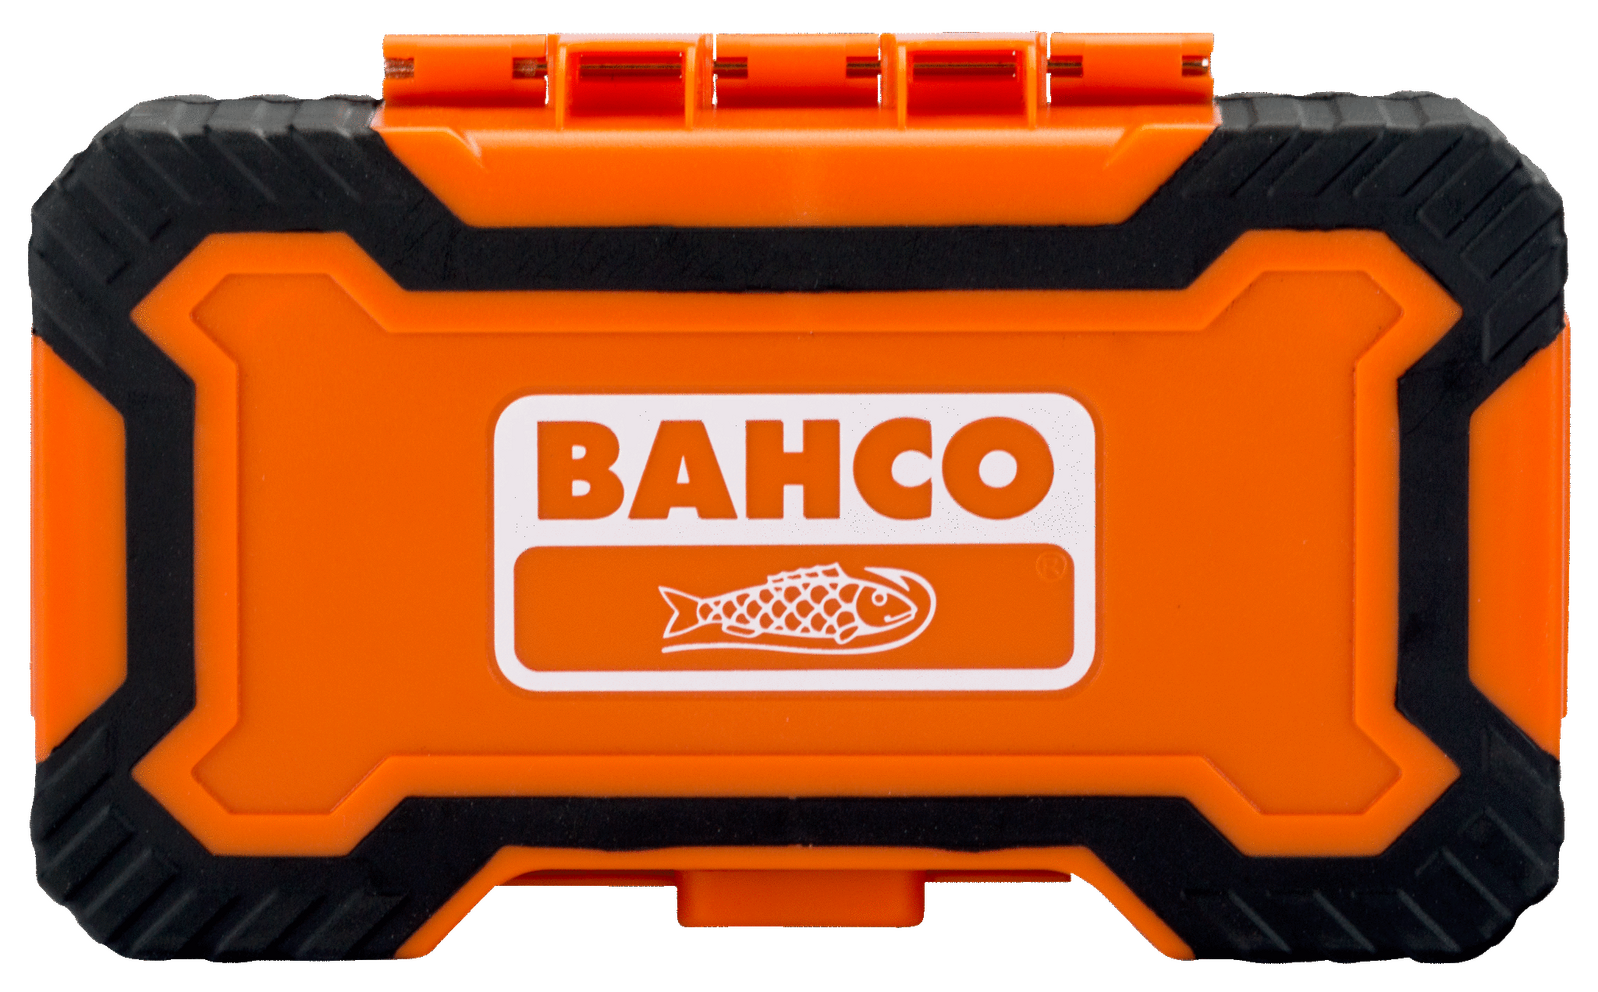 Bahco 1/4" Bit Screwdriver Set - 100 Piece 59/S100BC Flathead Phillips Pozidriv Torx & Hex Keys